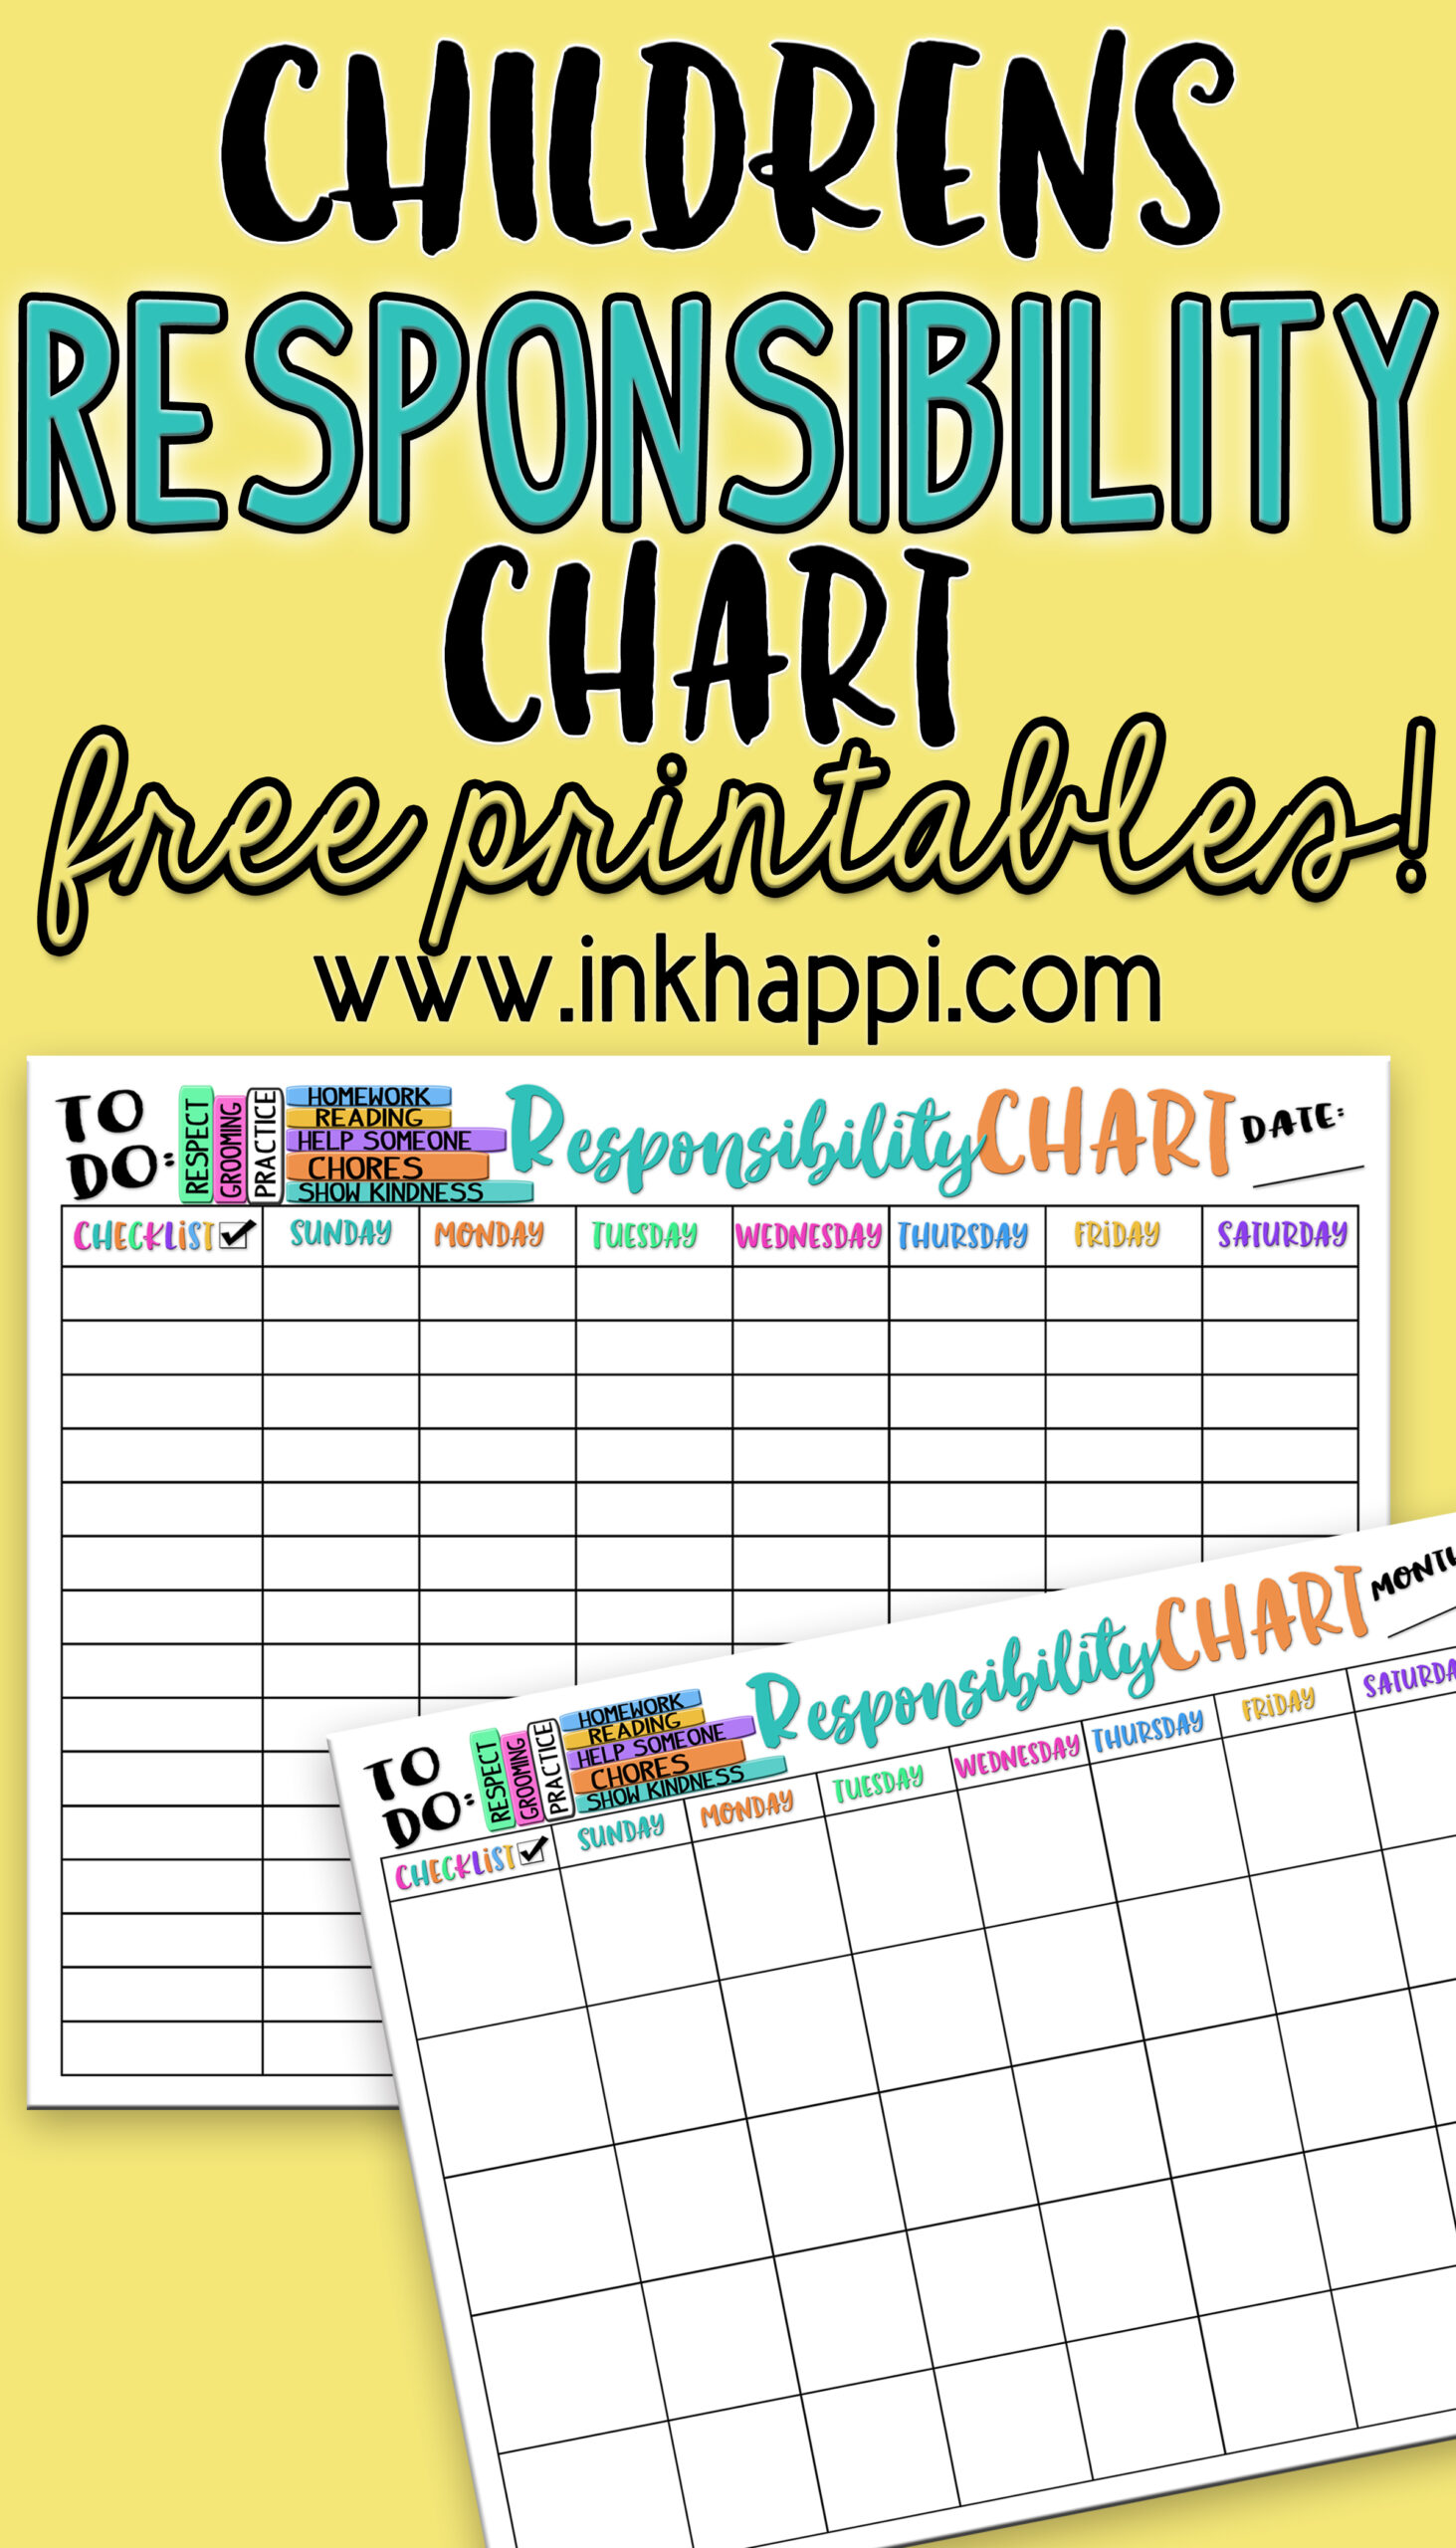 Childrens Responsibility Charts Free Printables inkhappi